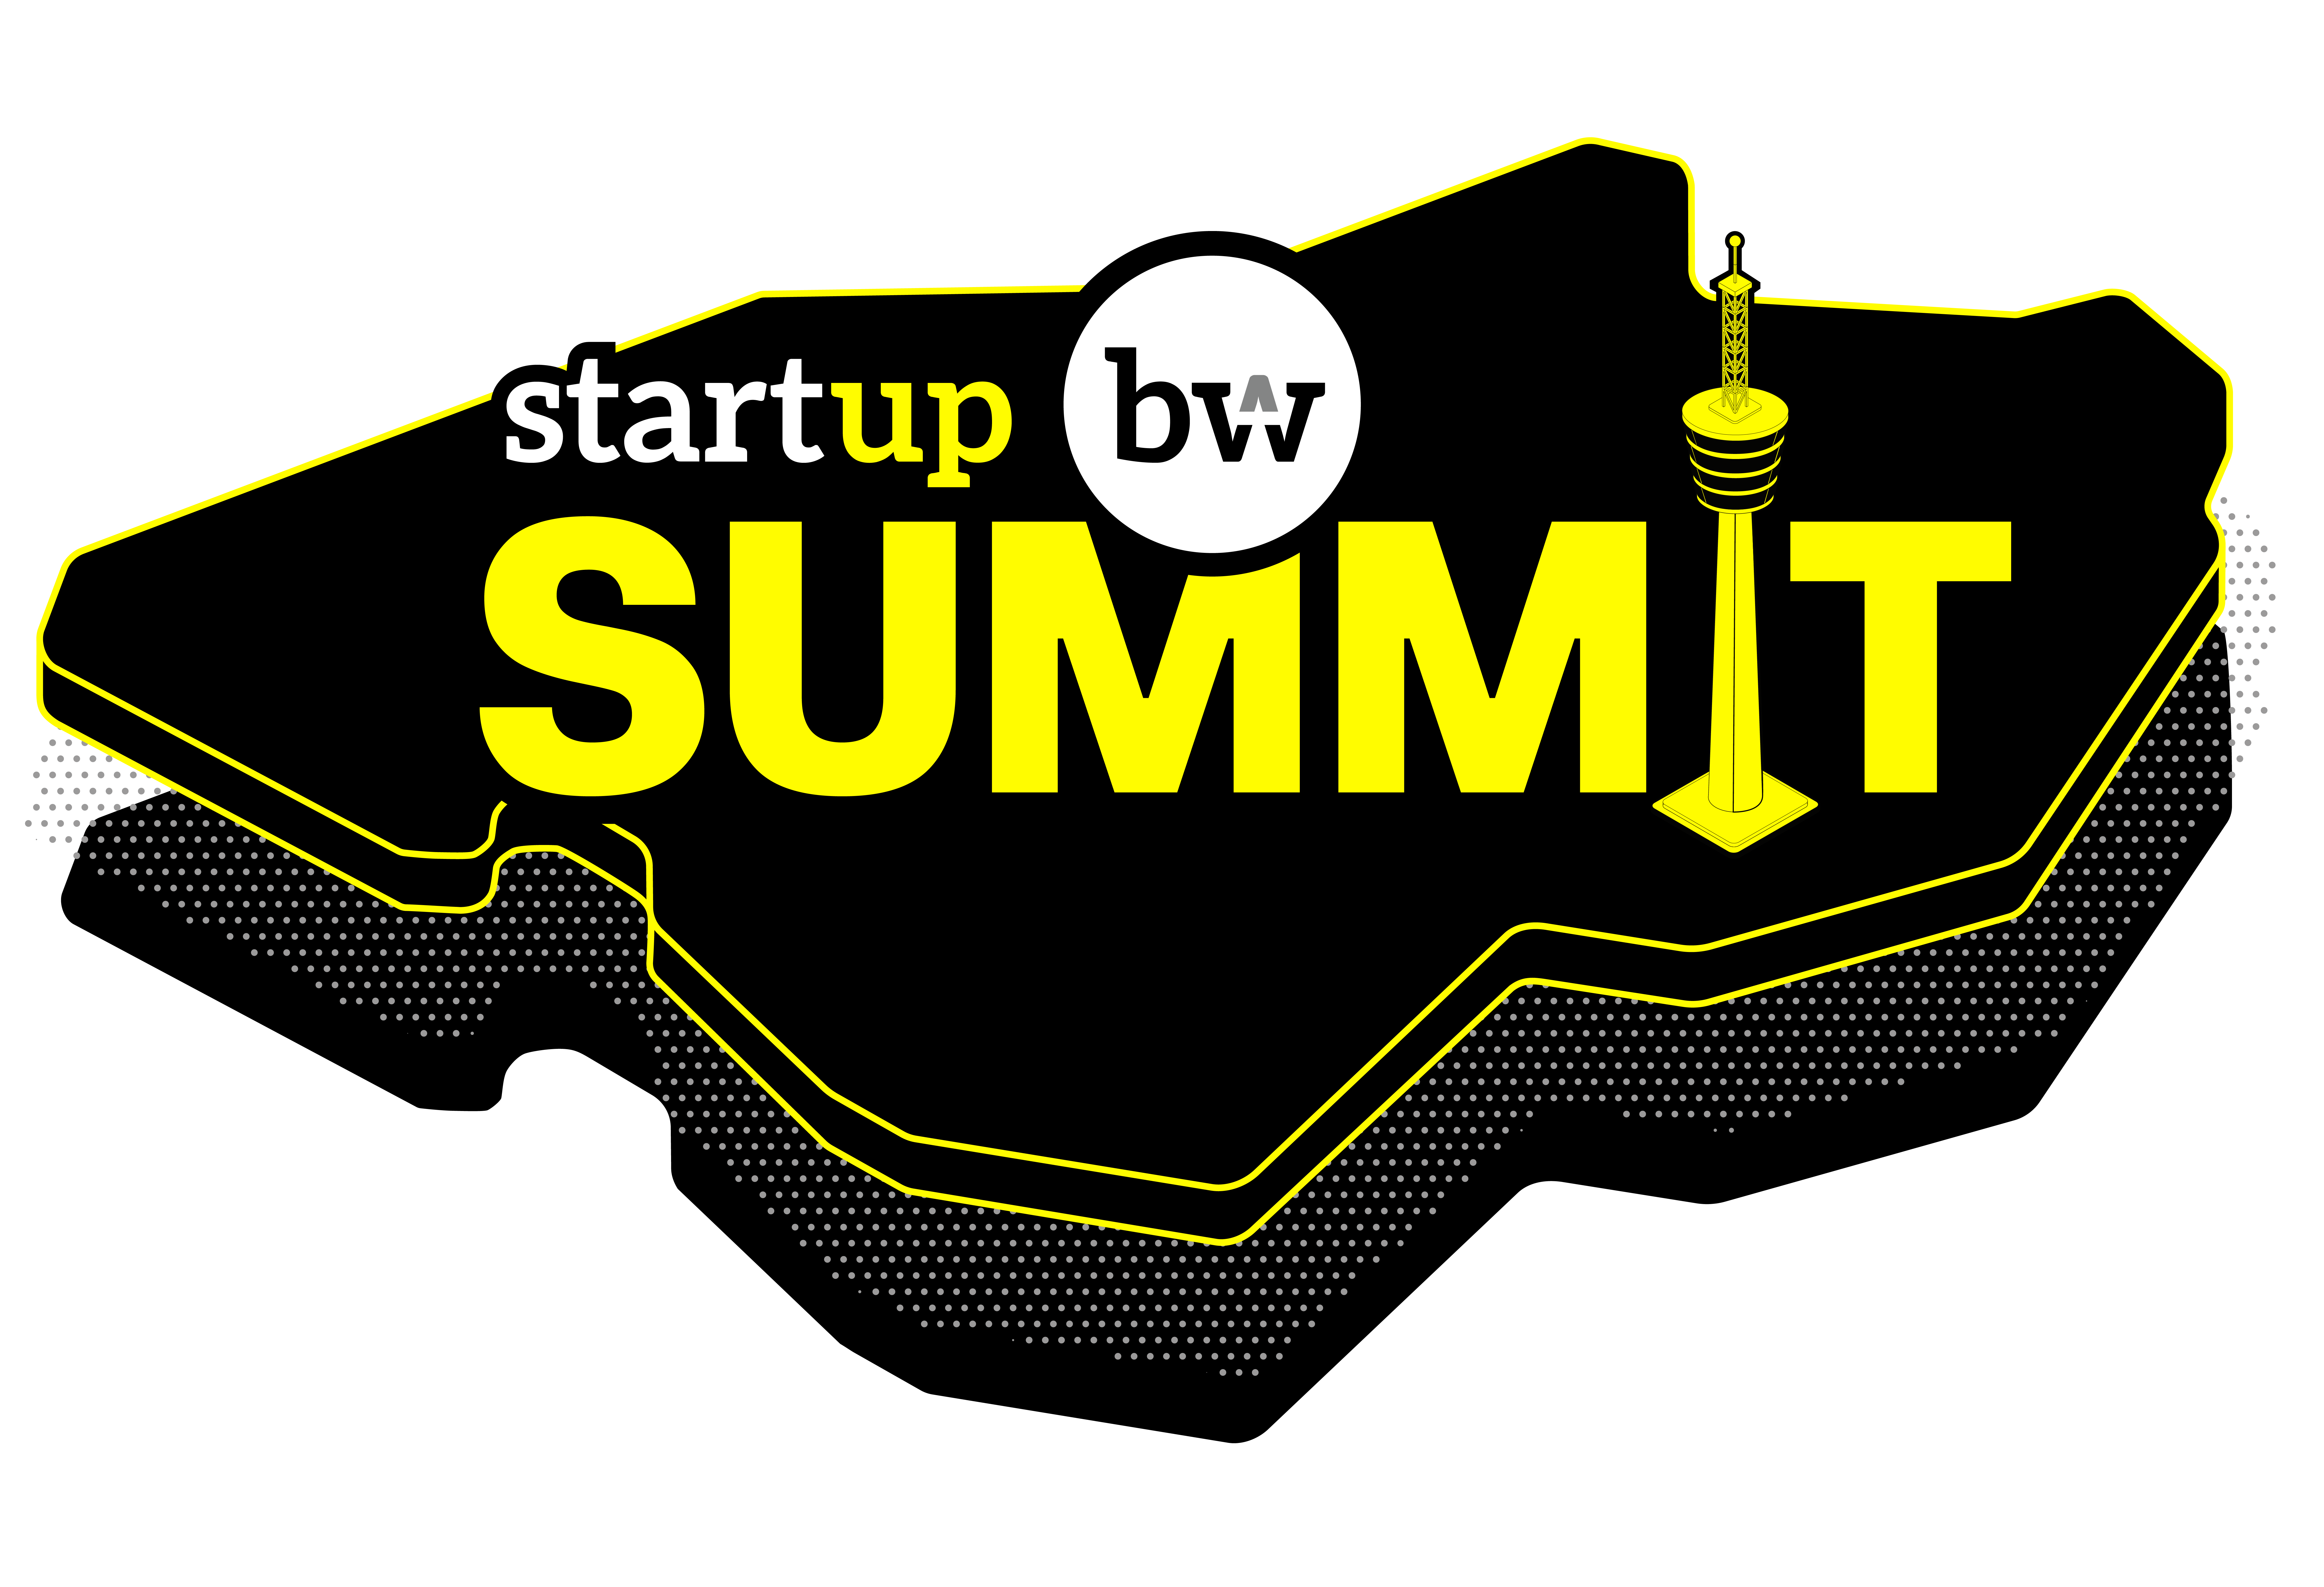 Startup BW summit